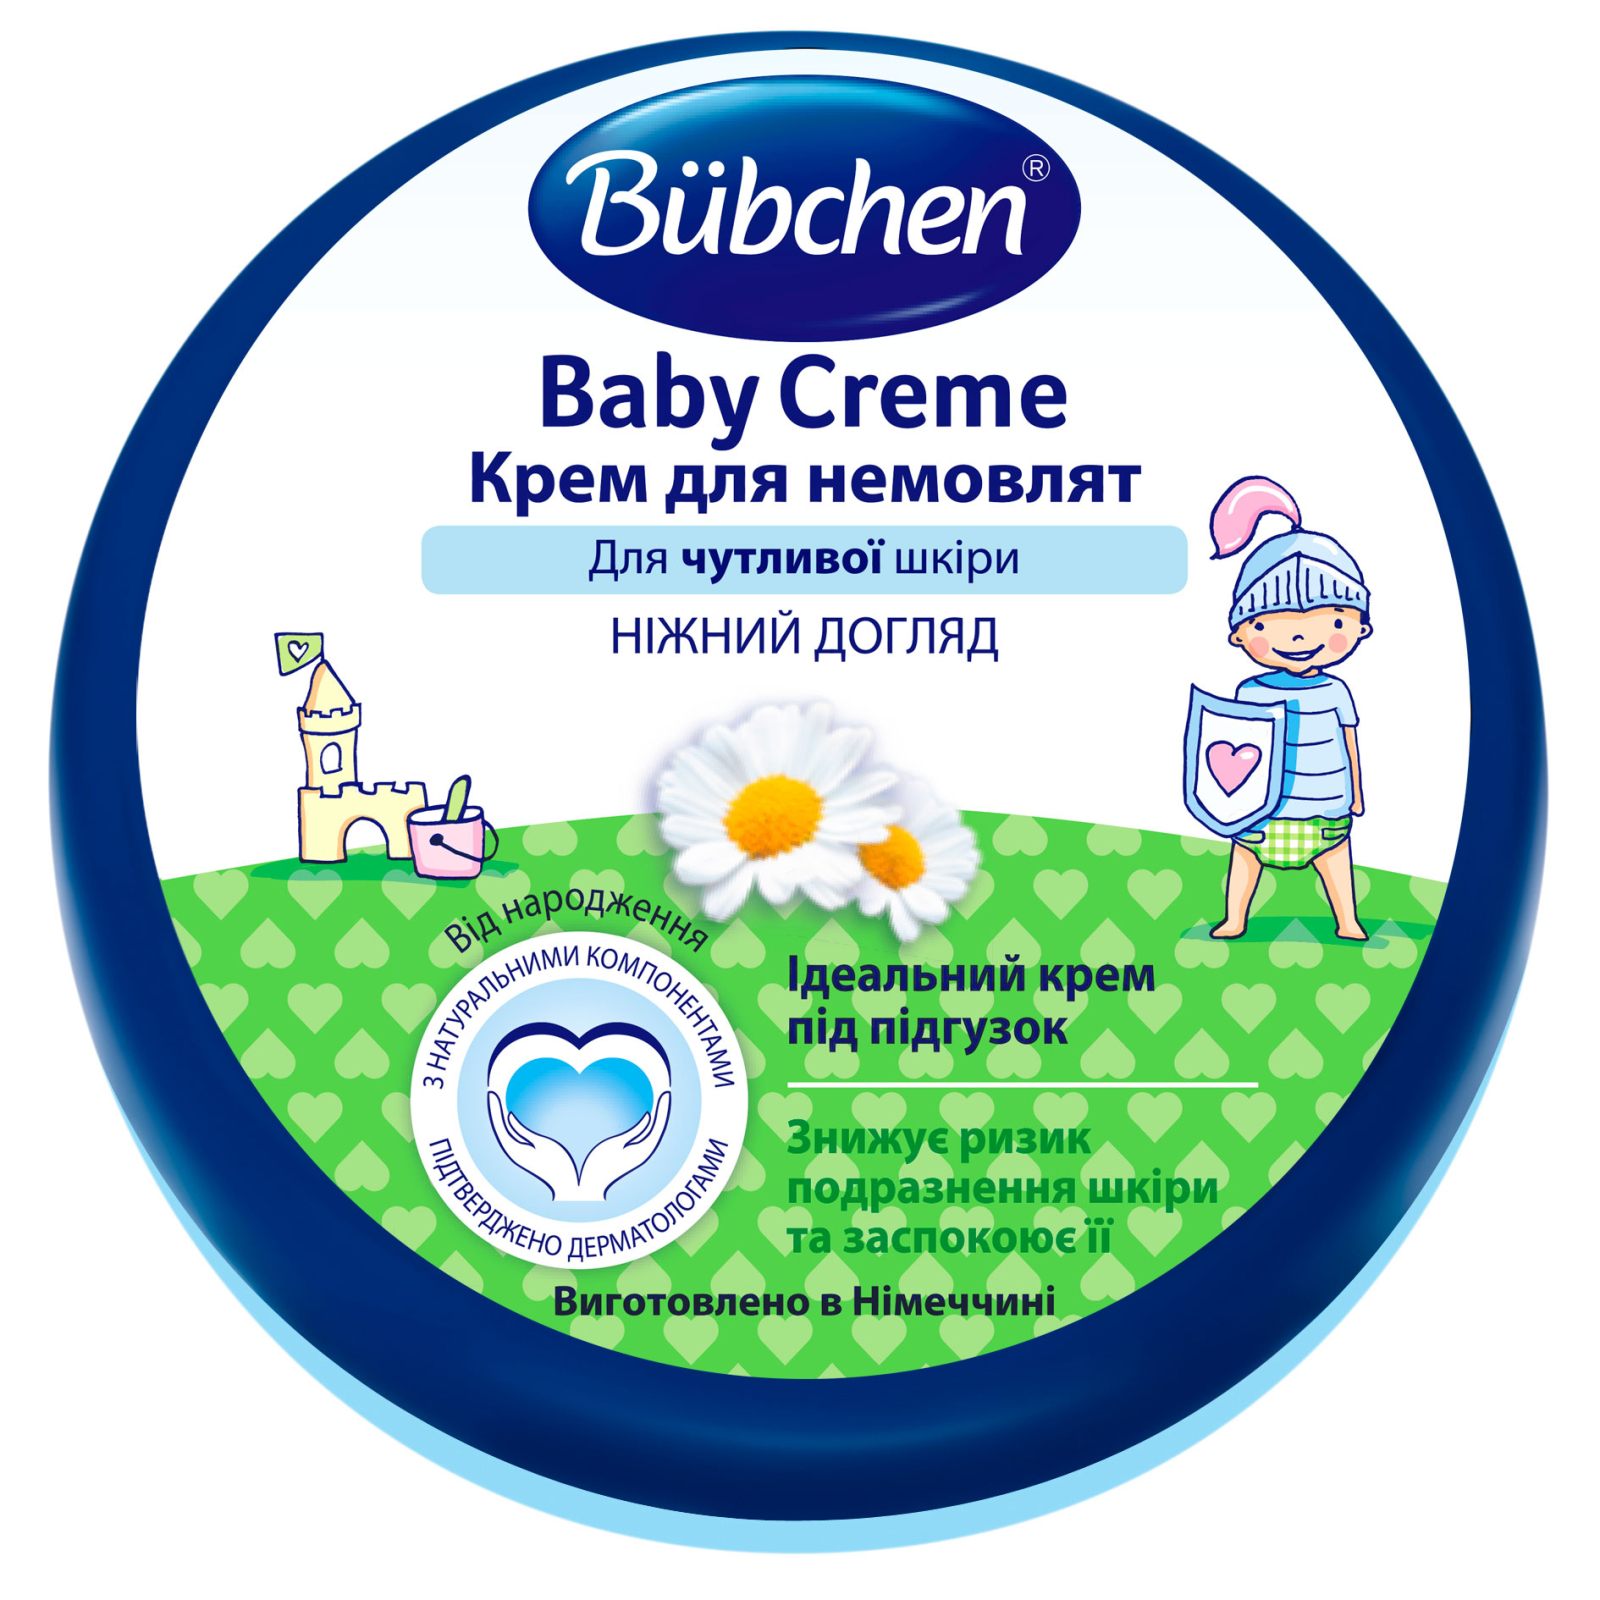 Дитячий крем Bubchen для немовлят 20 мл (7613032214135)